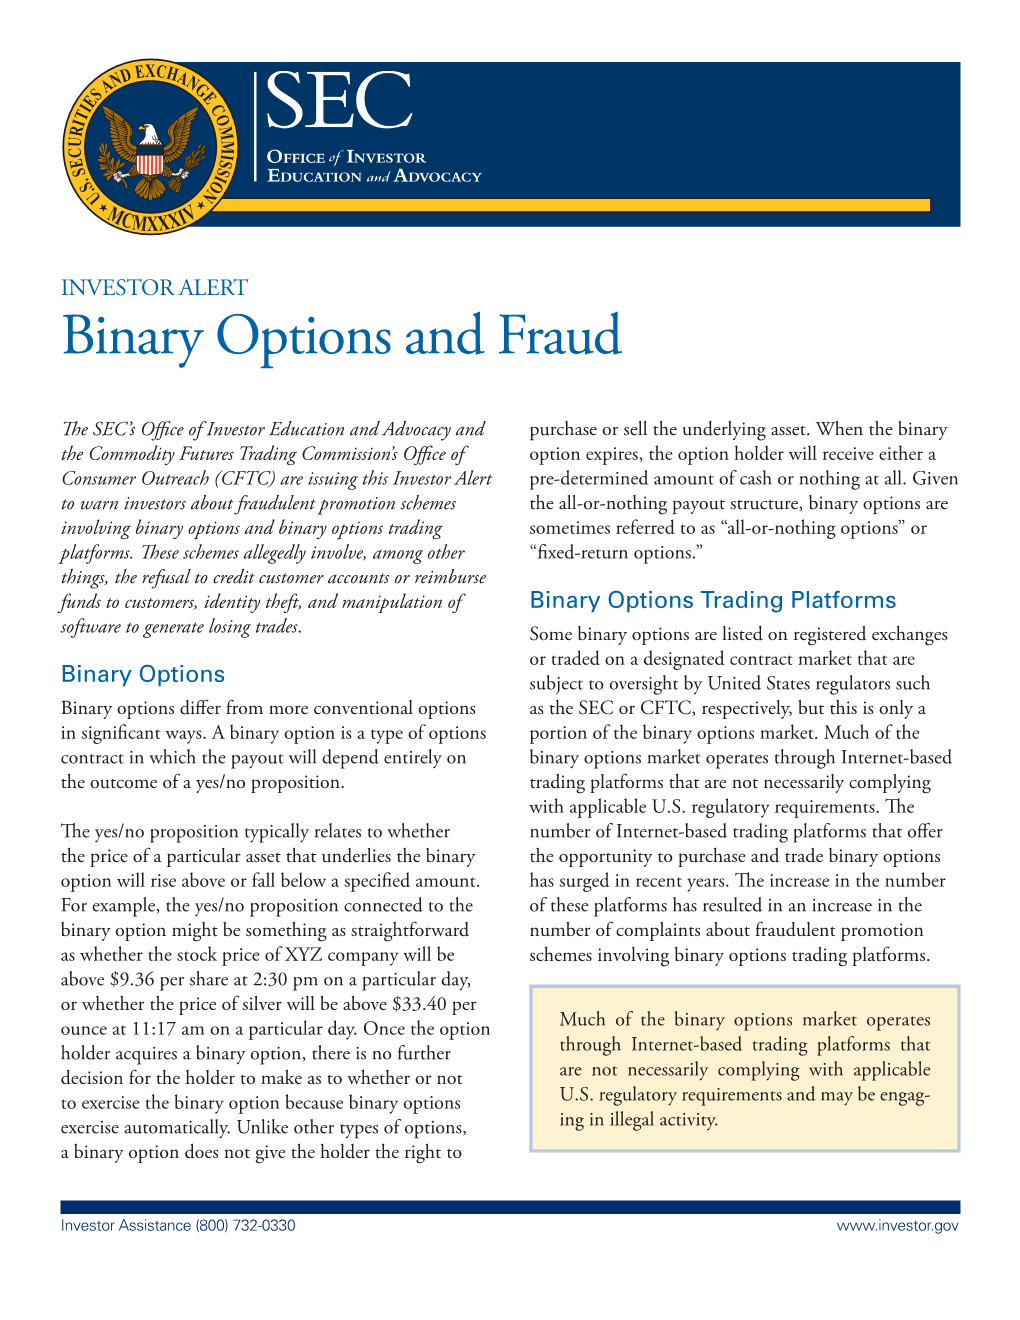 Investor Alert: Binary Options and Fraud